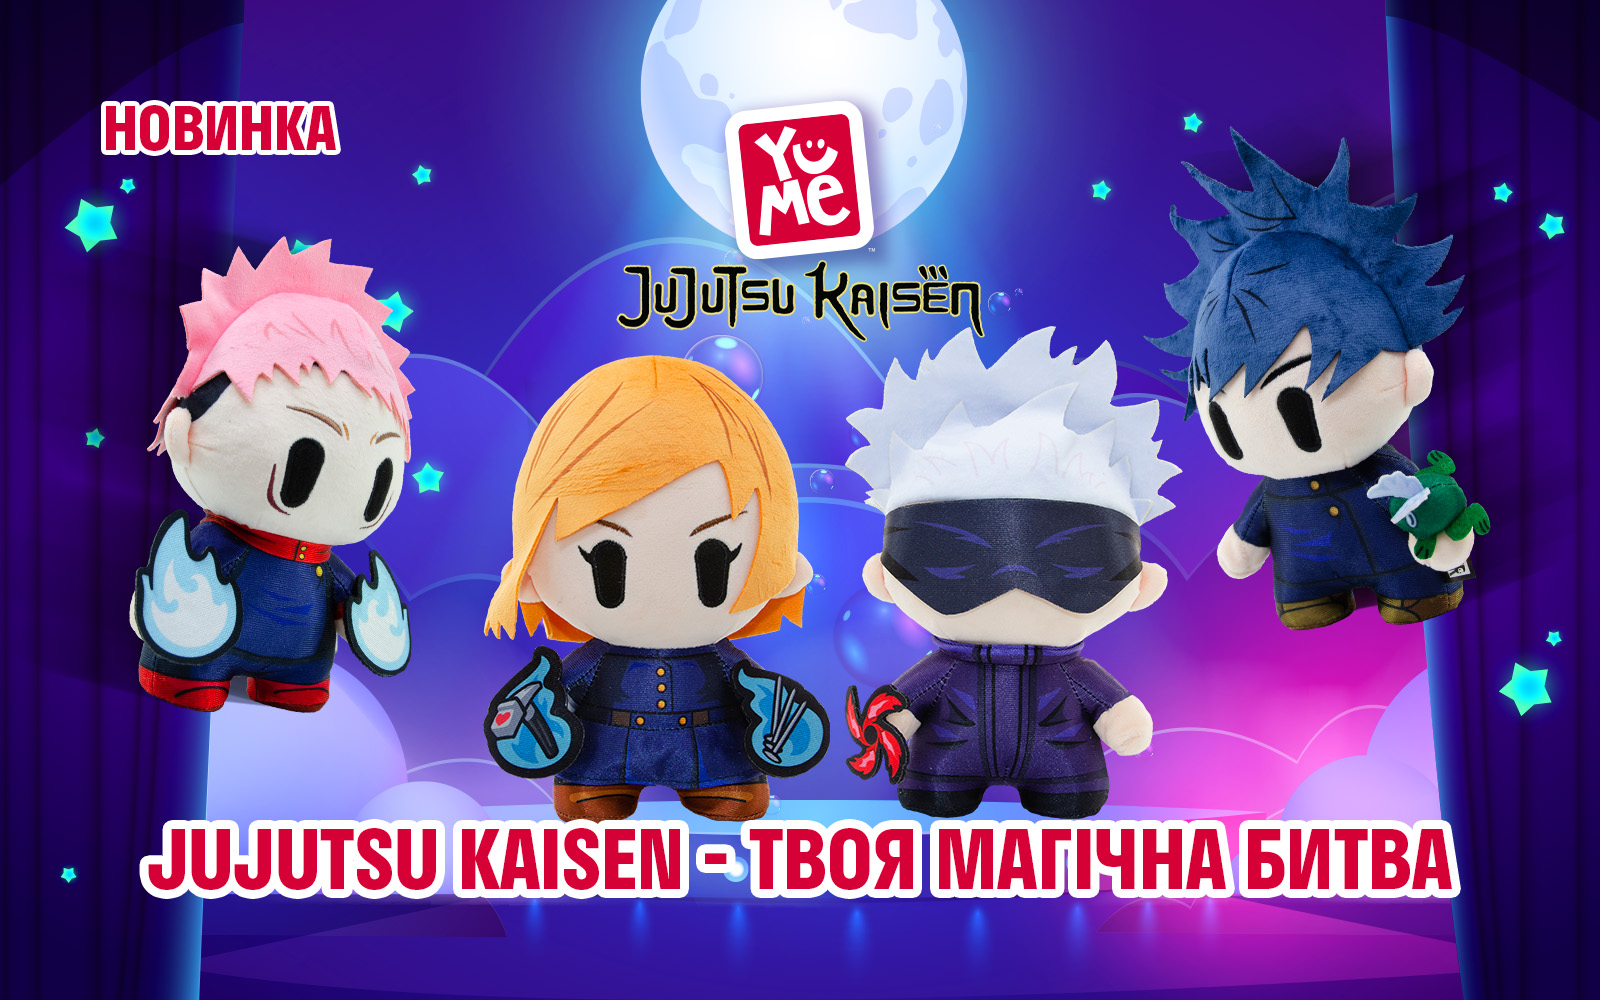 New from YUME! Jujutsu Kaisen Soft Toys!